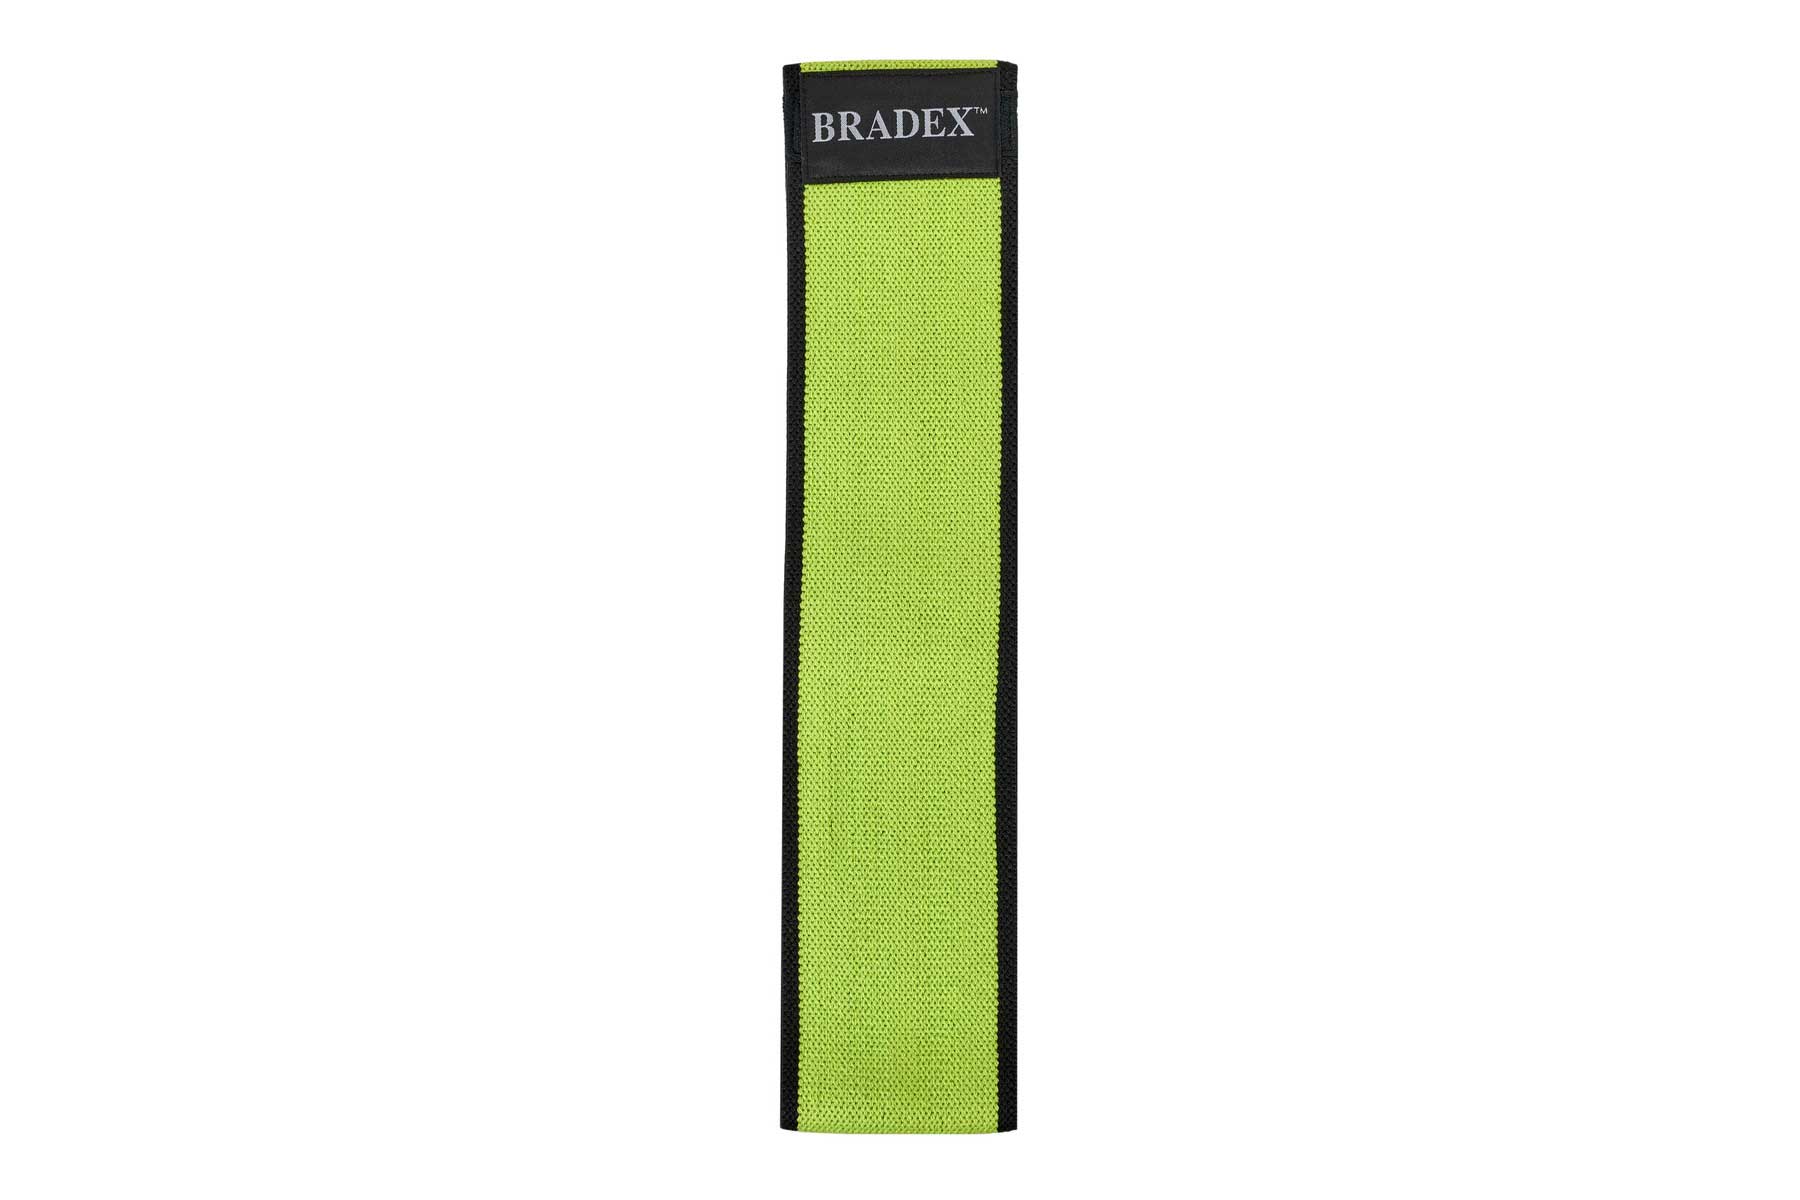 Текстильная фитнес резинка Bradex SF 0750, размер M, нагрузка 11-16 кг